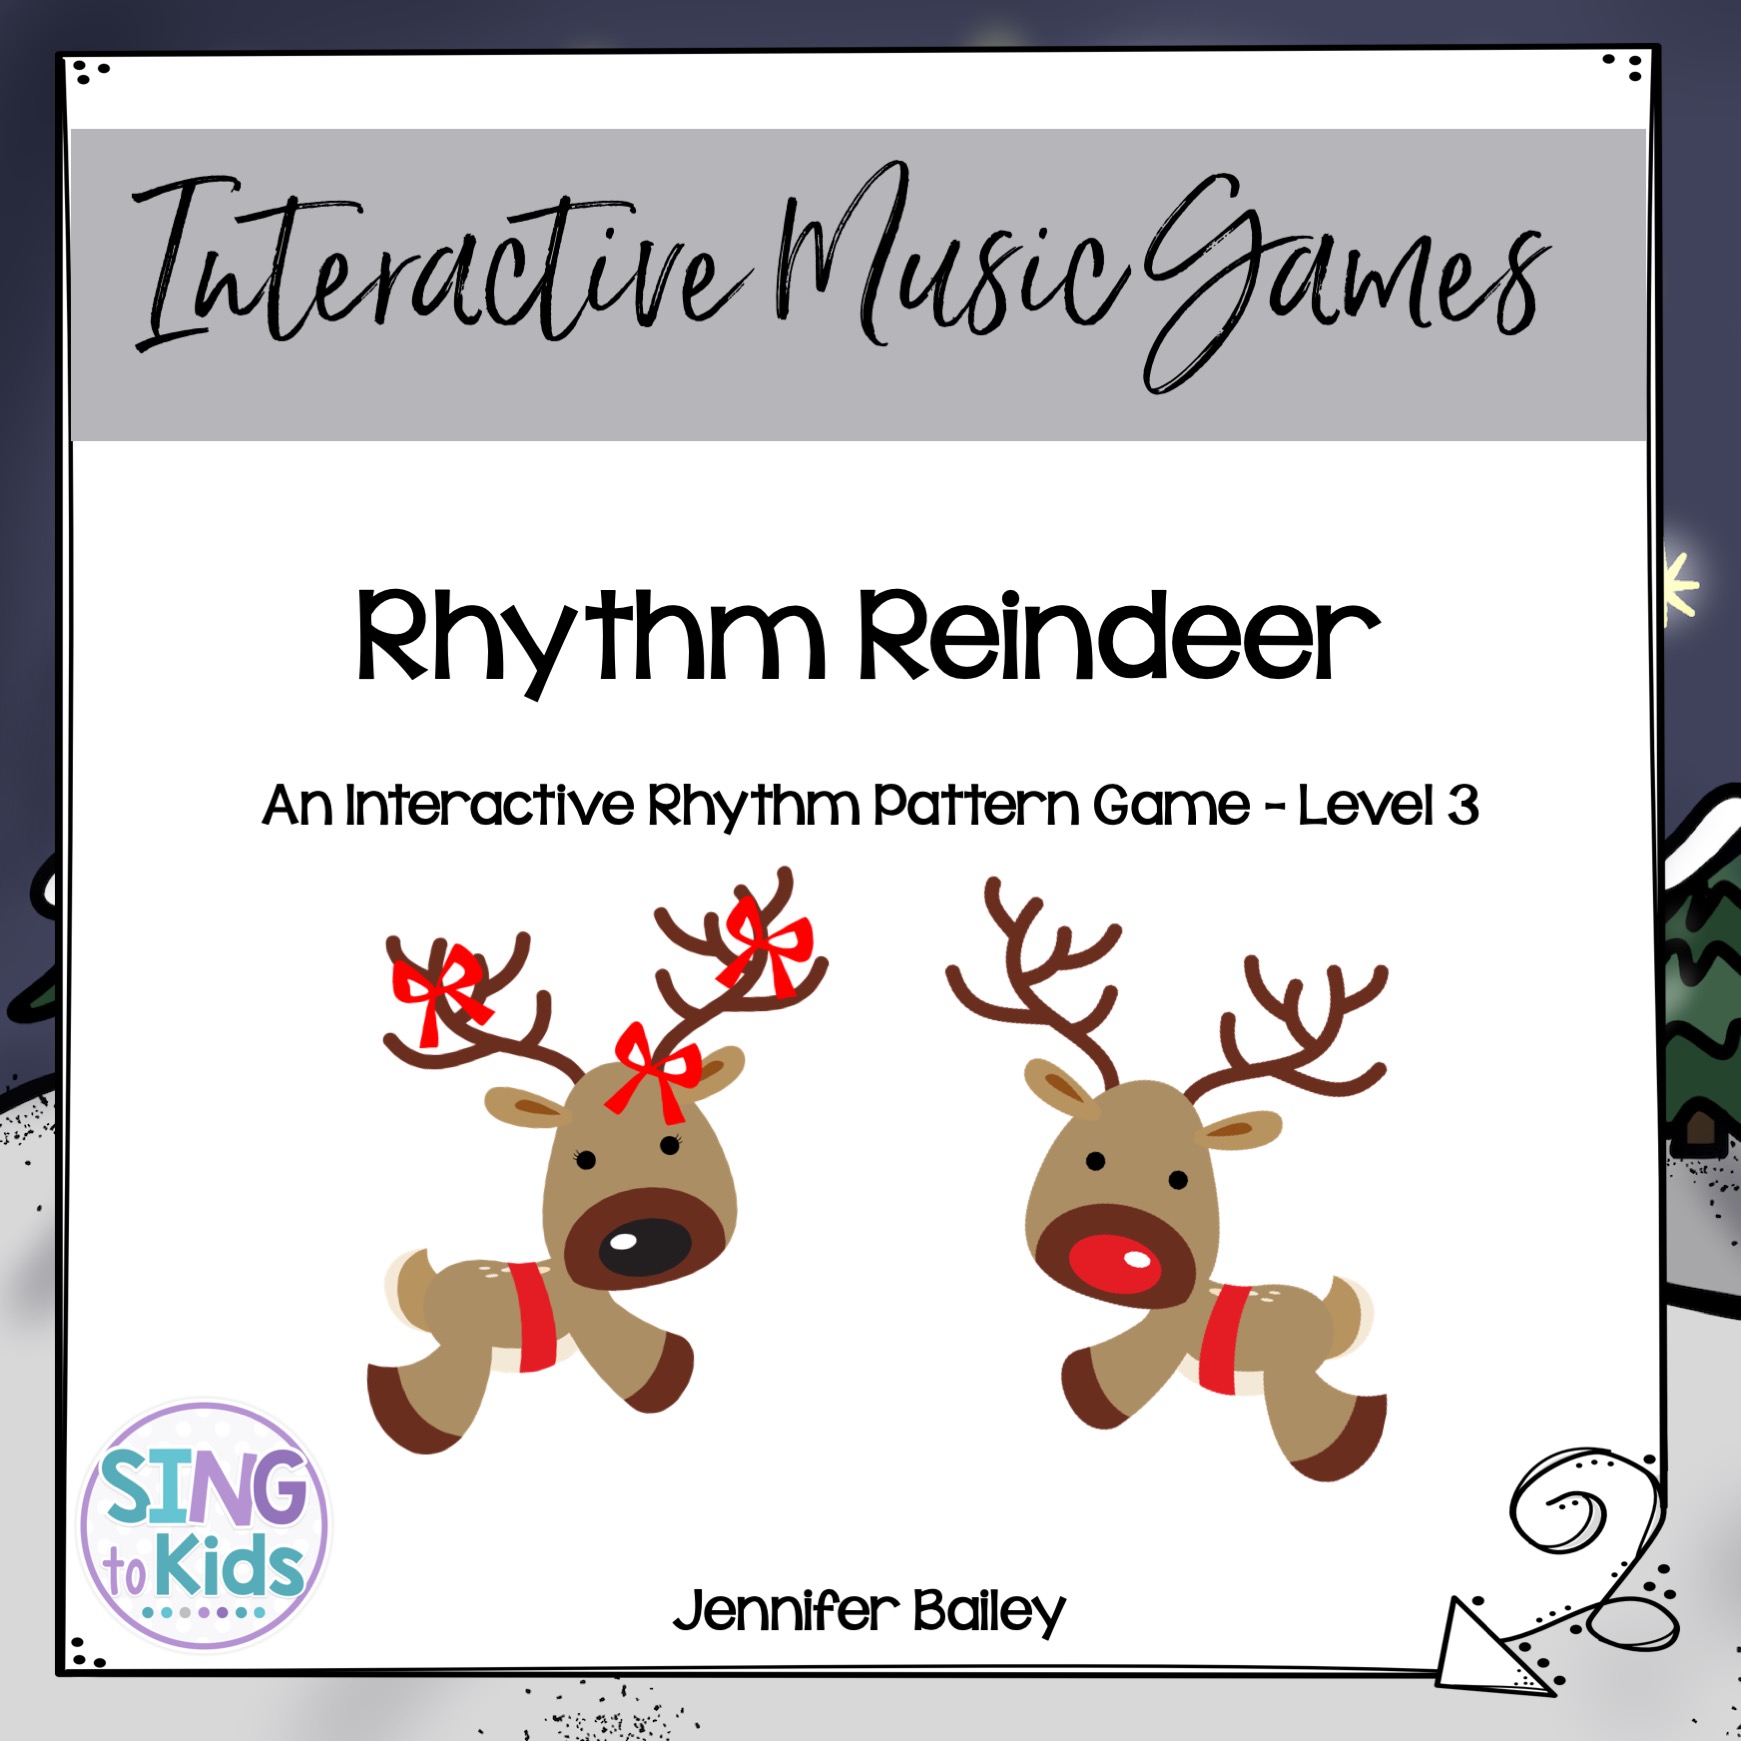 reindeer games for kids